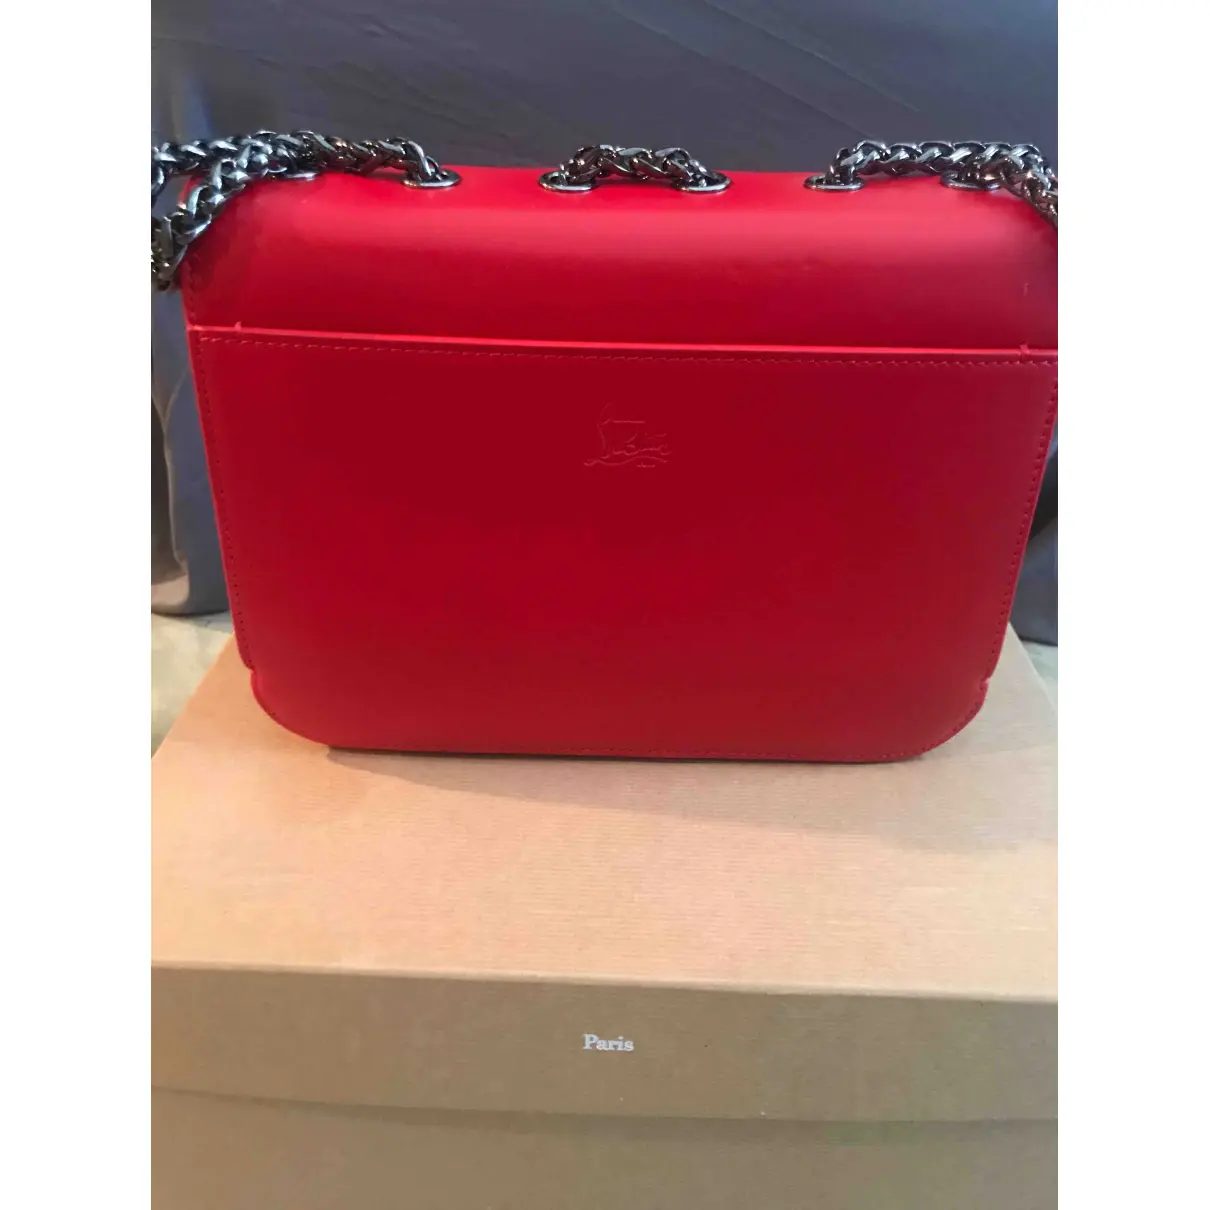 Buy Christian Louboutin Sweet Charity leather crossbody bag online